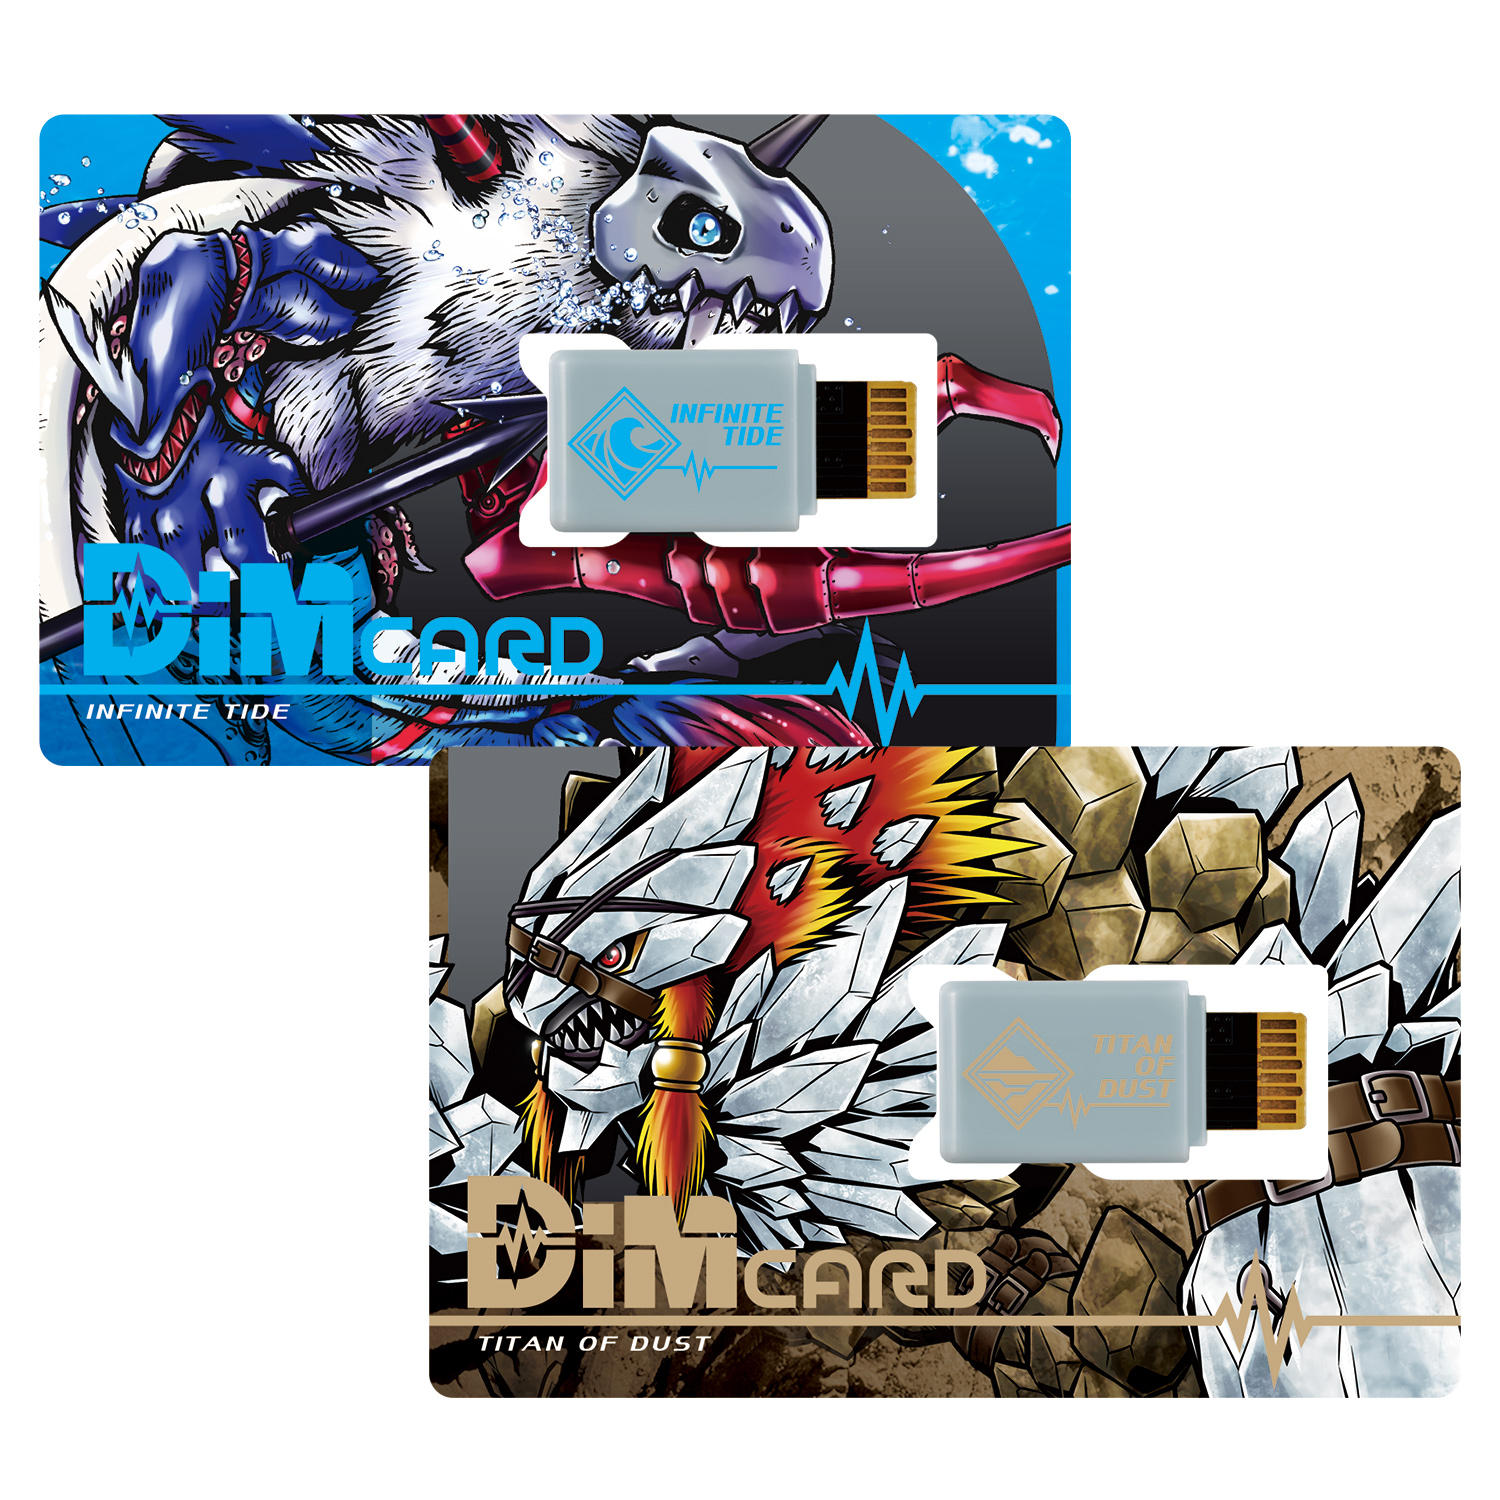 Vital Bracelet Digital Monster Dim Card Vol.2 INFINITE TIDE ＆ TITAN OF DUST and Vital Bracelet Digital Monster Dim Card Vol.3 HERMIT IN THE JUNGLE＆NU METAL EMPIRE